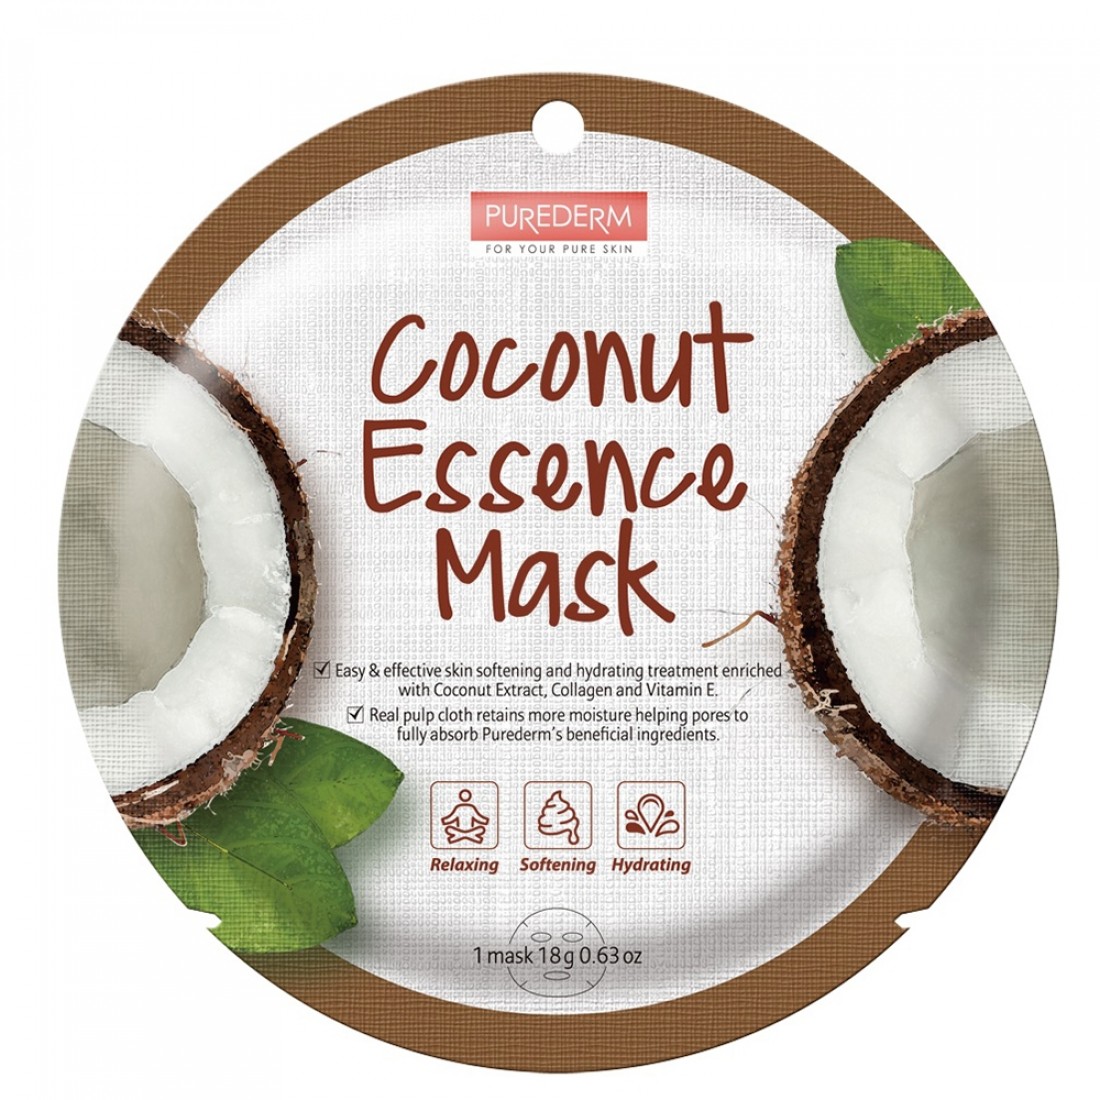 purederm_coconut_essence_mask